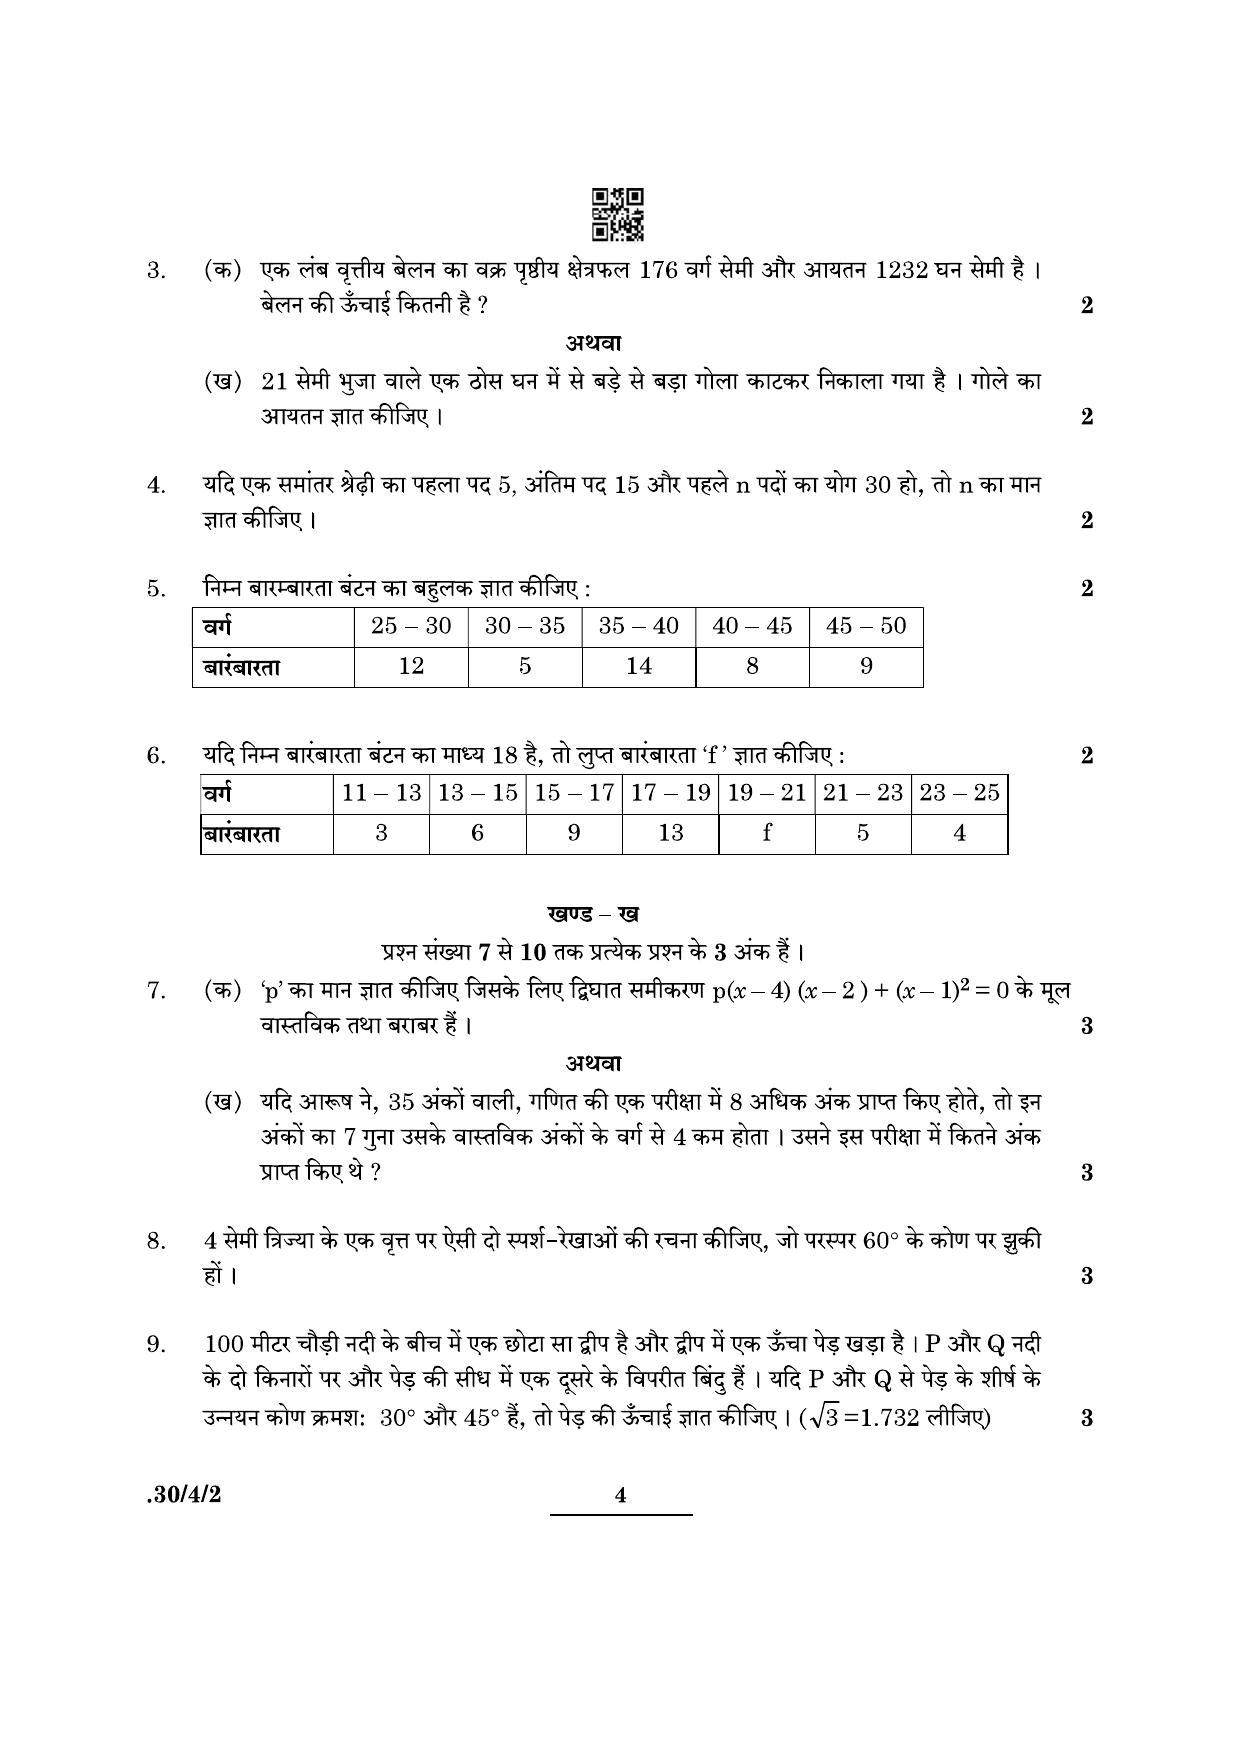 CBSE Class 10 Maths (30/4/2 - SET II) 2022 Question Paper - Page 4